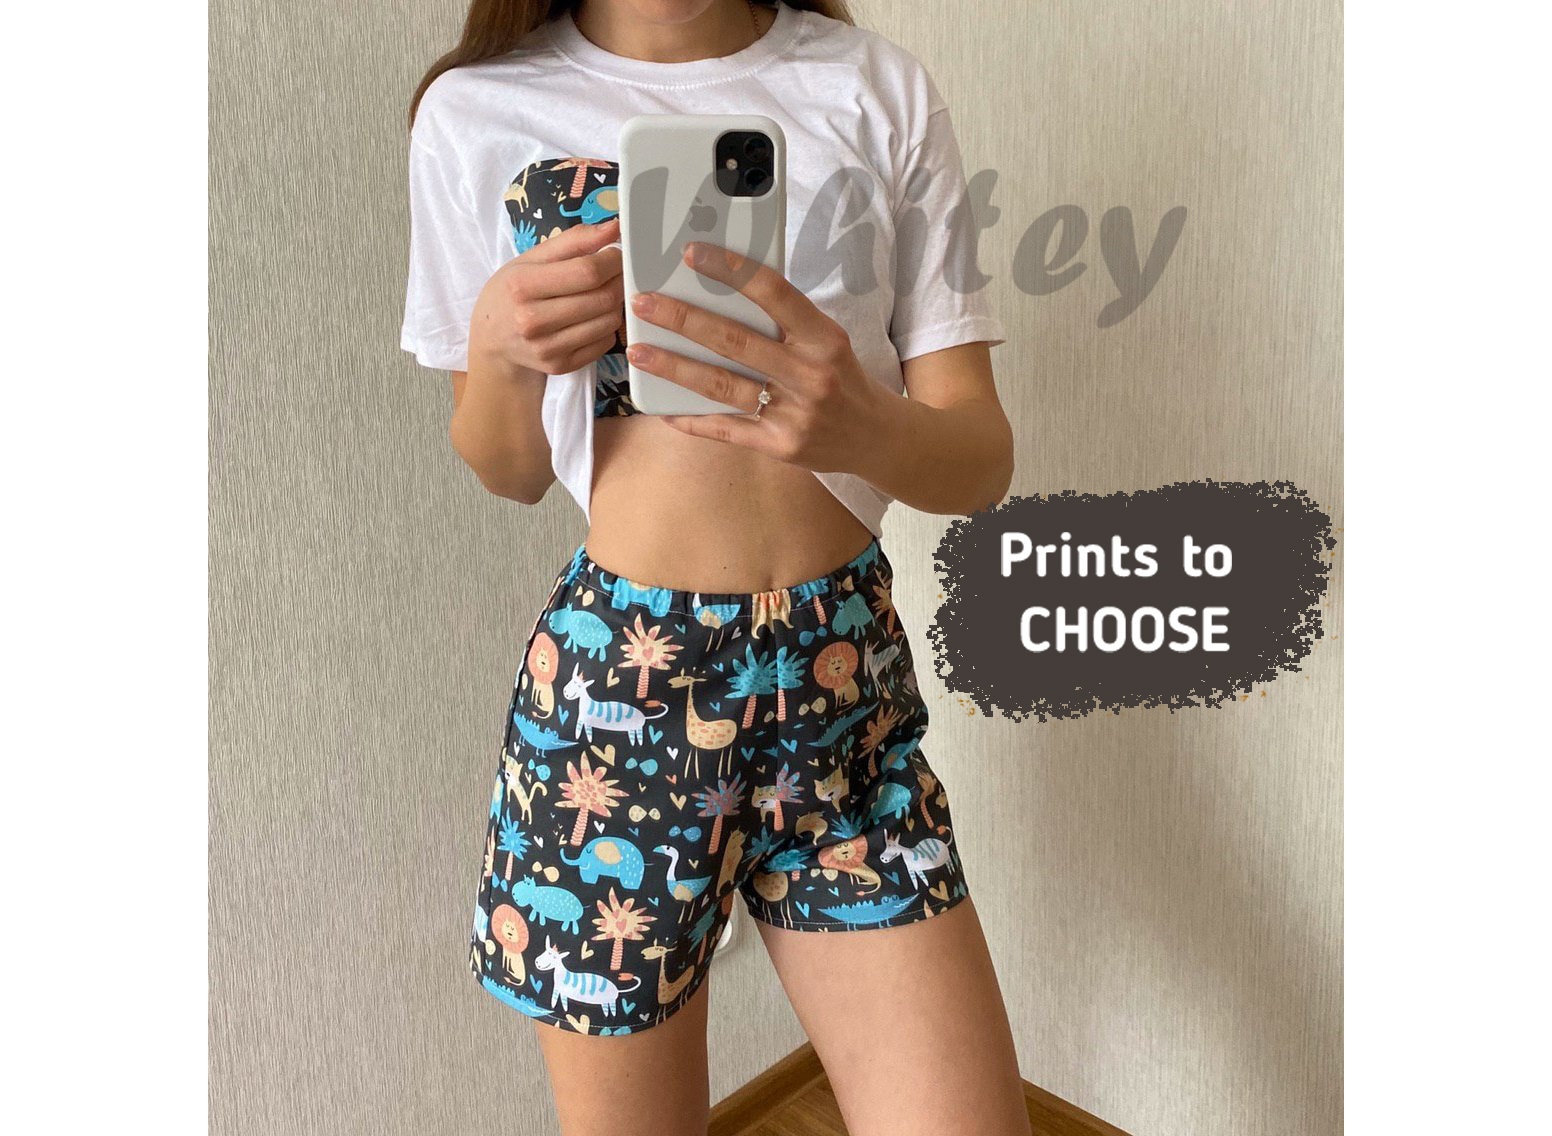 Adolescent Clothing pause t-shirt and shorts pyjama set